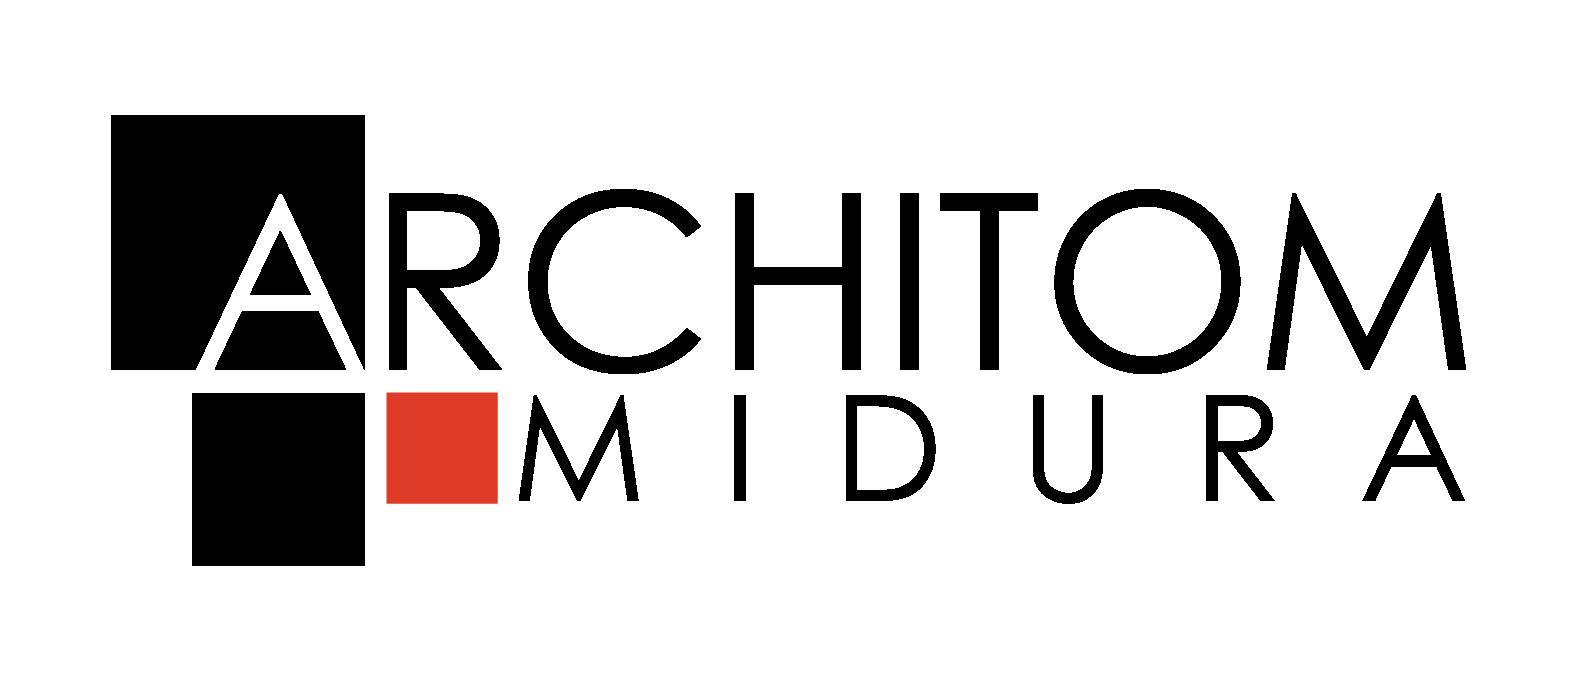 ArchitomMidura